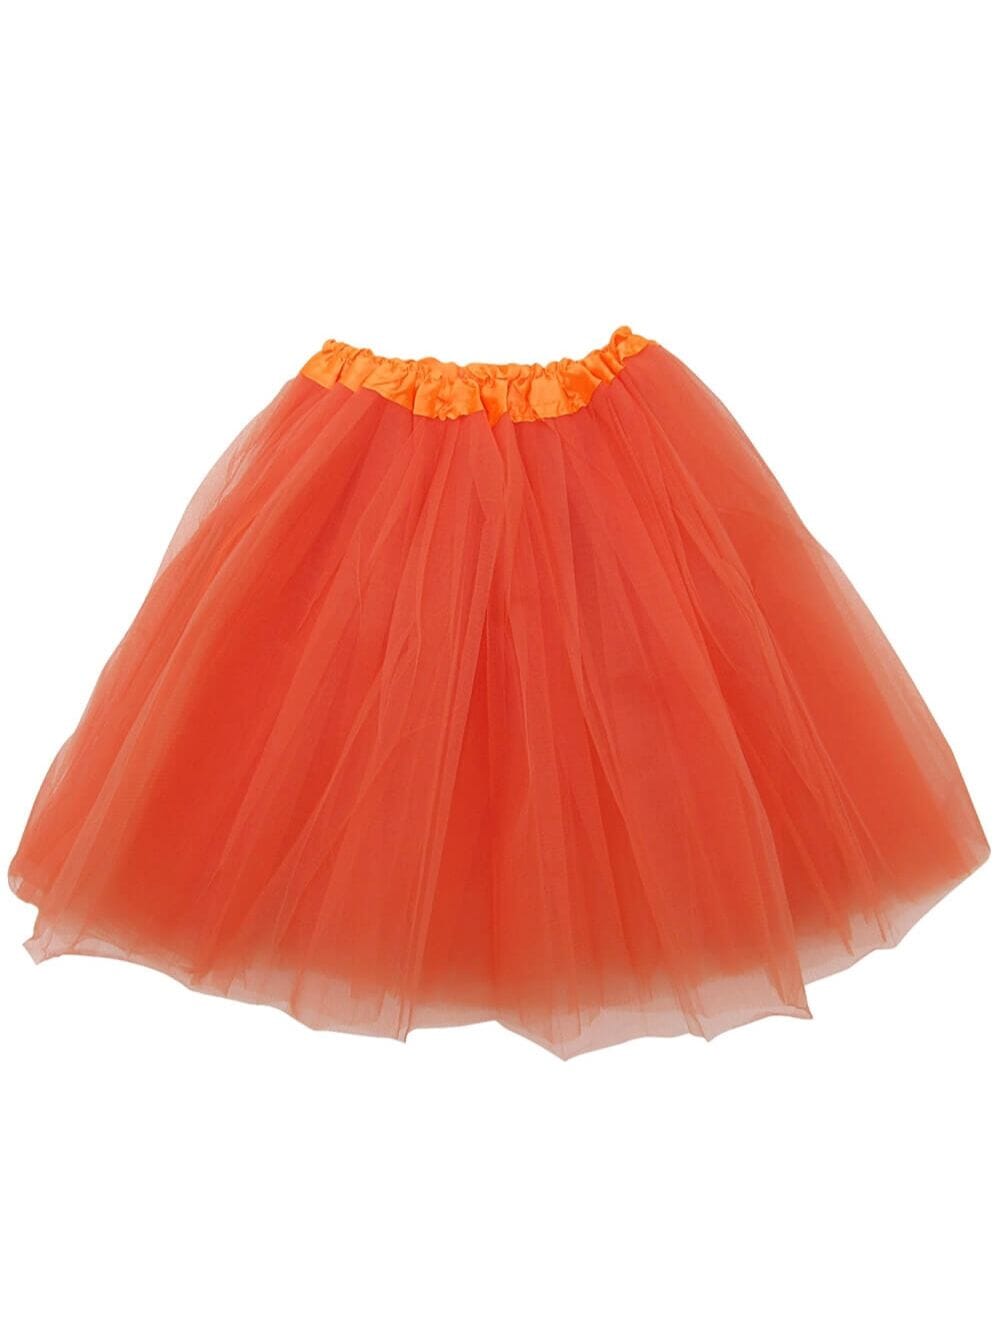 Orange Plus Size Adult Tutu Skirt - Women's Plus Size 3- Layer Basic Ballet Costume Dance Tutus - Sydney So Sweet